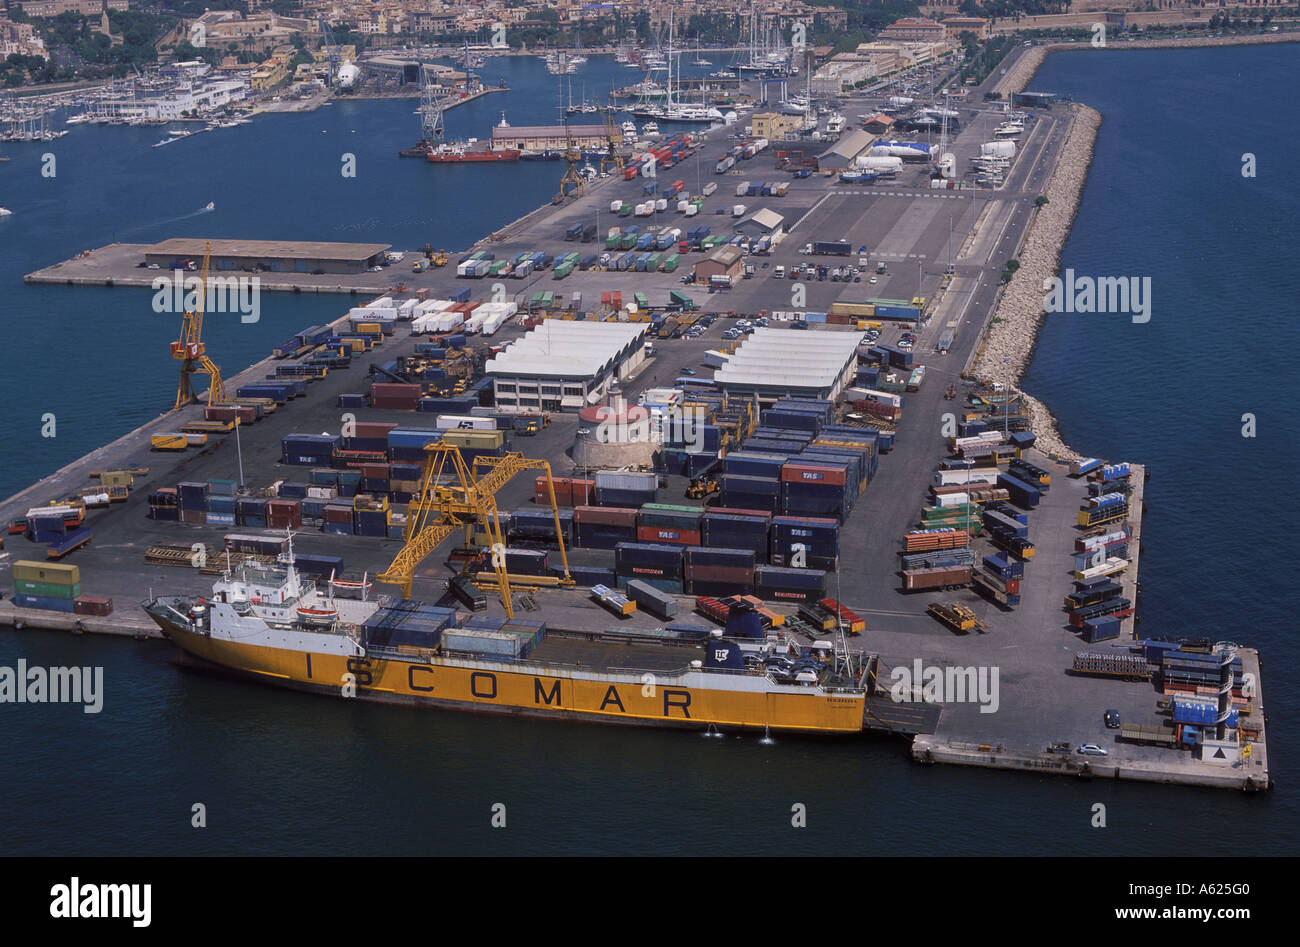 Aerial view of commercial quay with ISCOMAR ro ro container vessel Benirredra at berth, Palma de Mallorca. Stock Photo